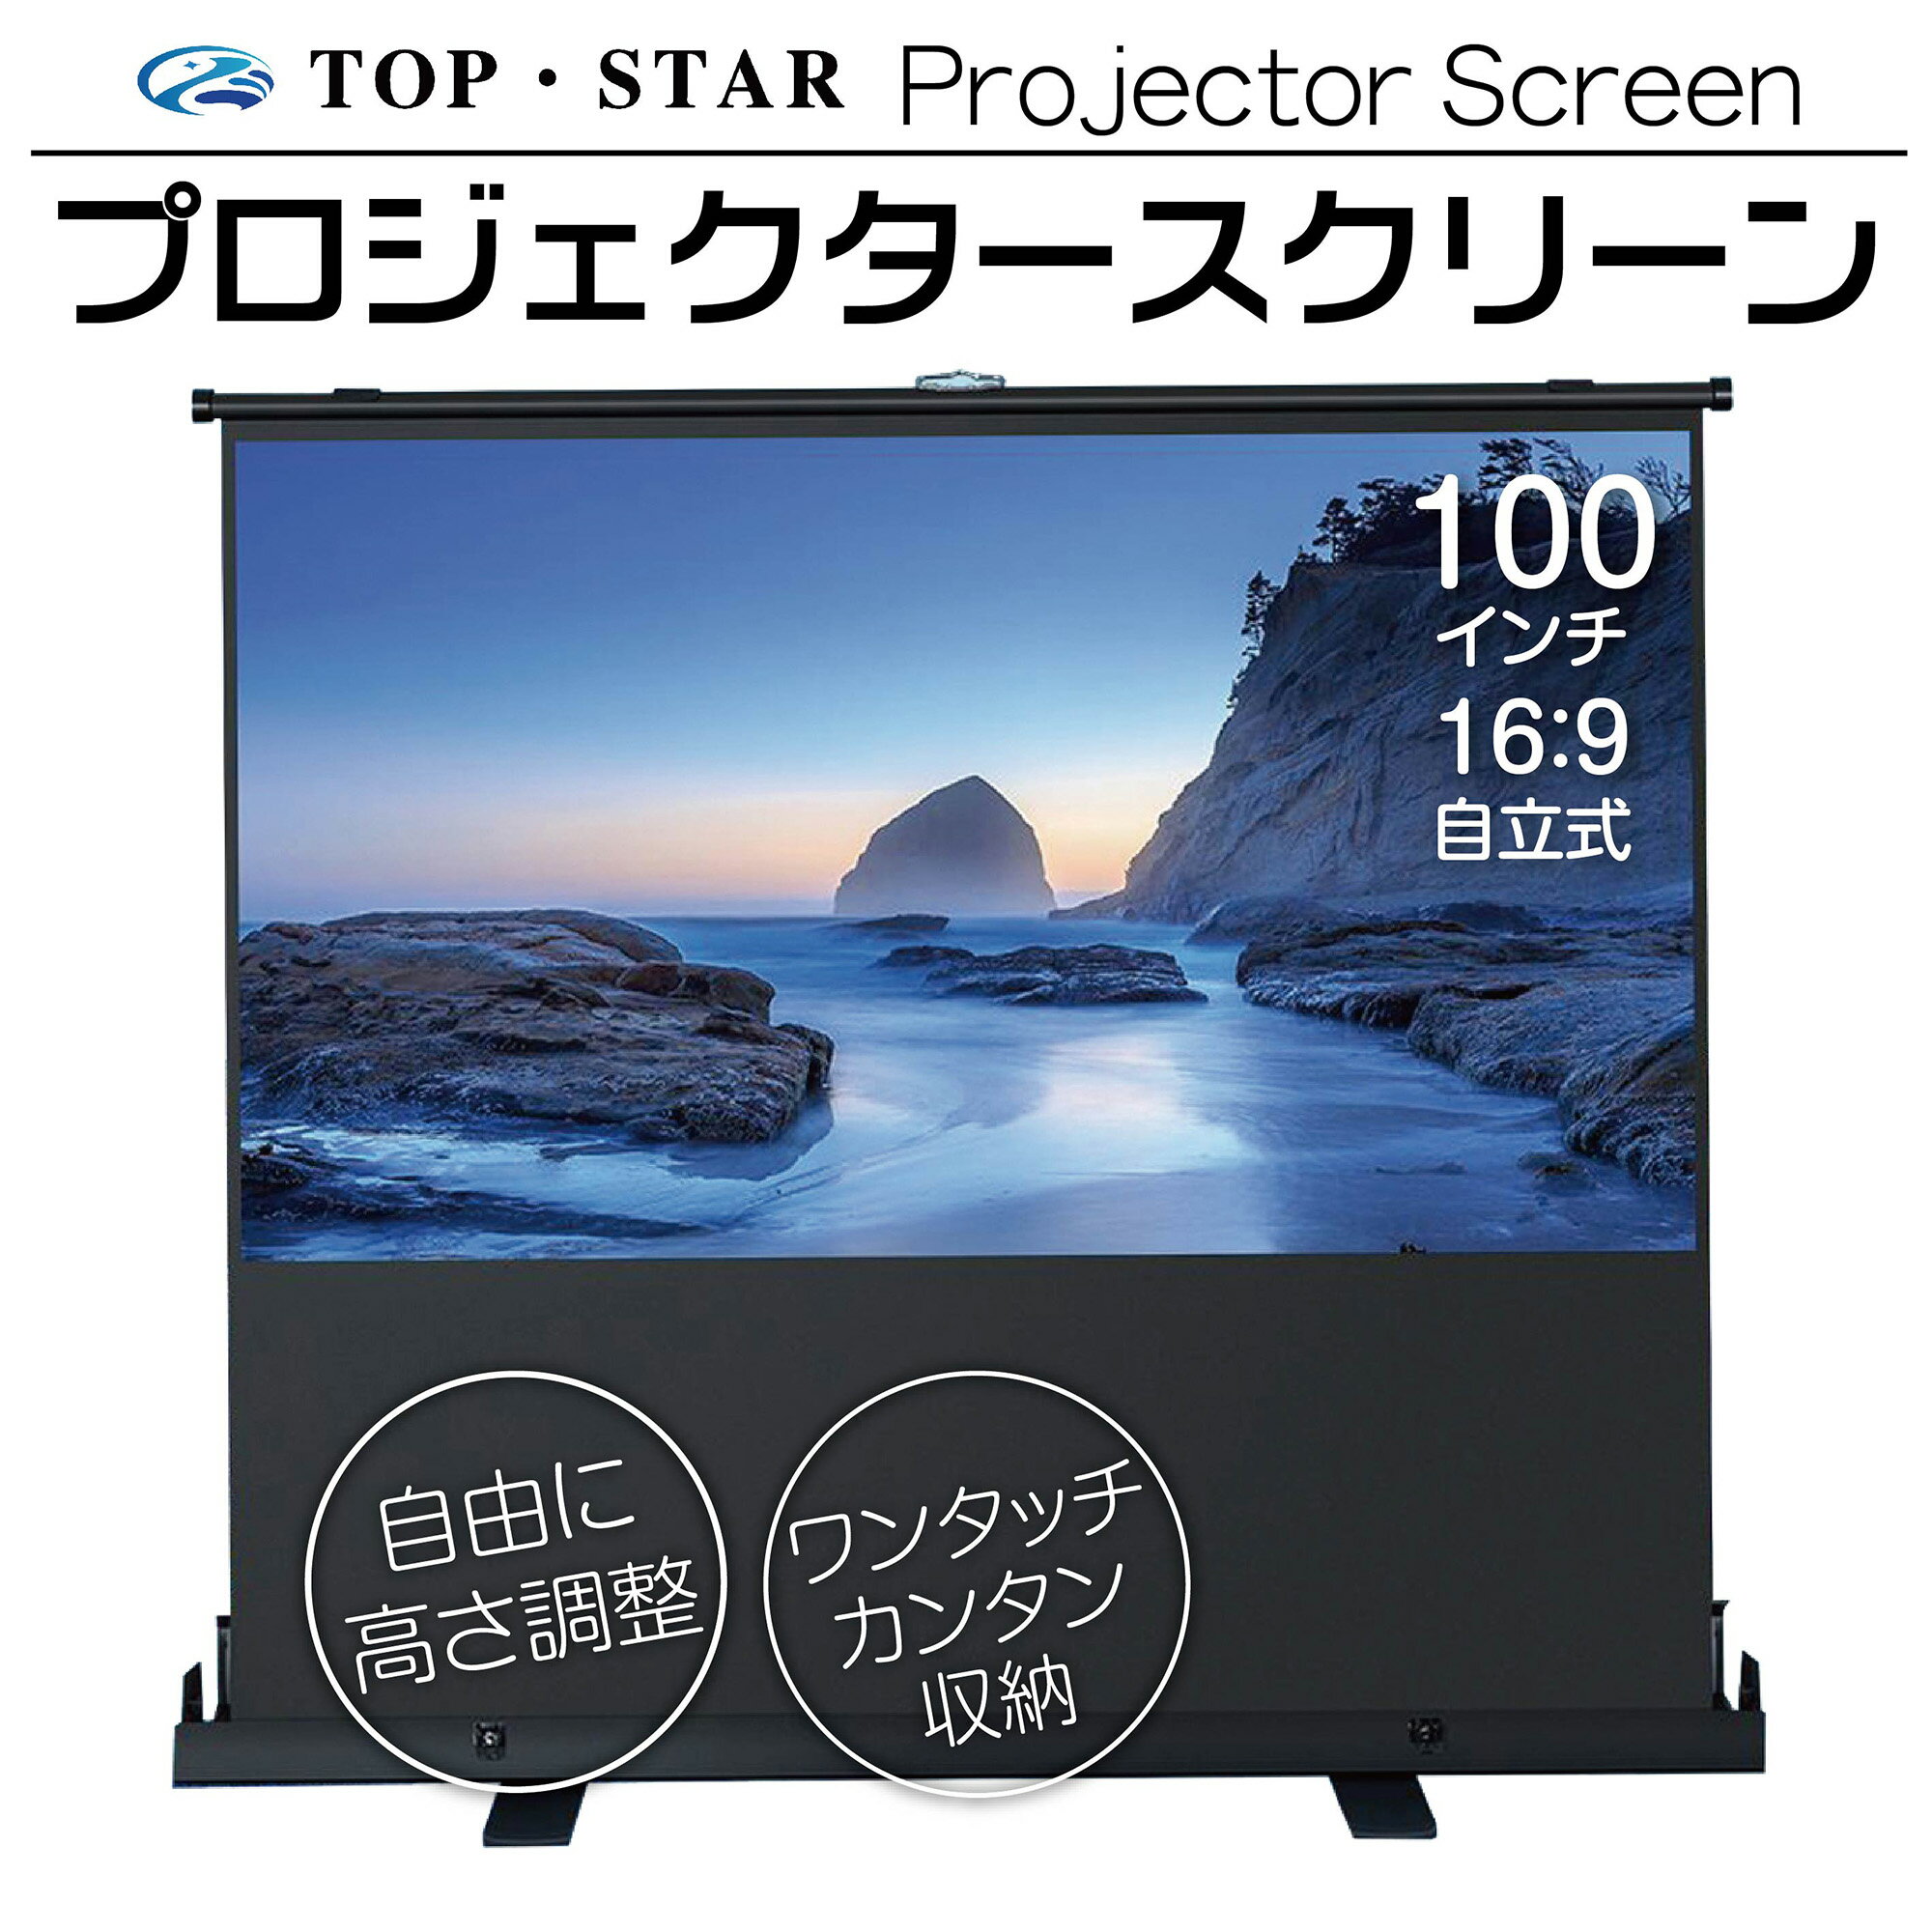 TOP・STAR プロジェクタースクリーン 100インチ 16:9プロジェクター用 自立式 小型 家庭用 自立 PJS-100-169 